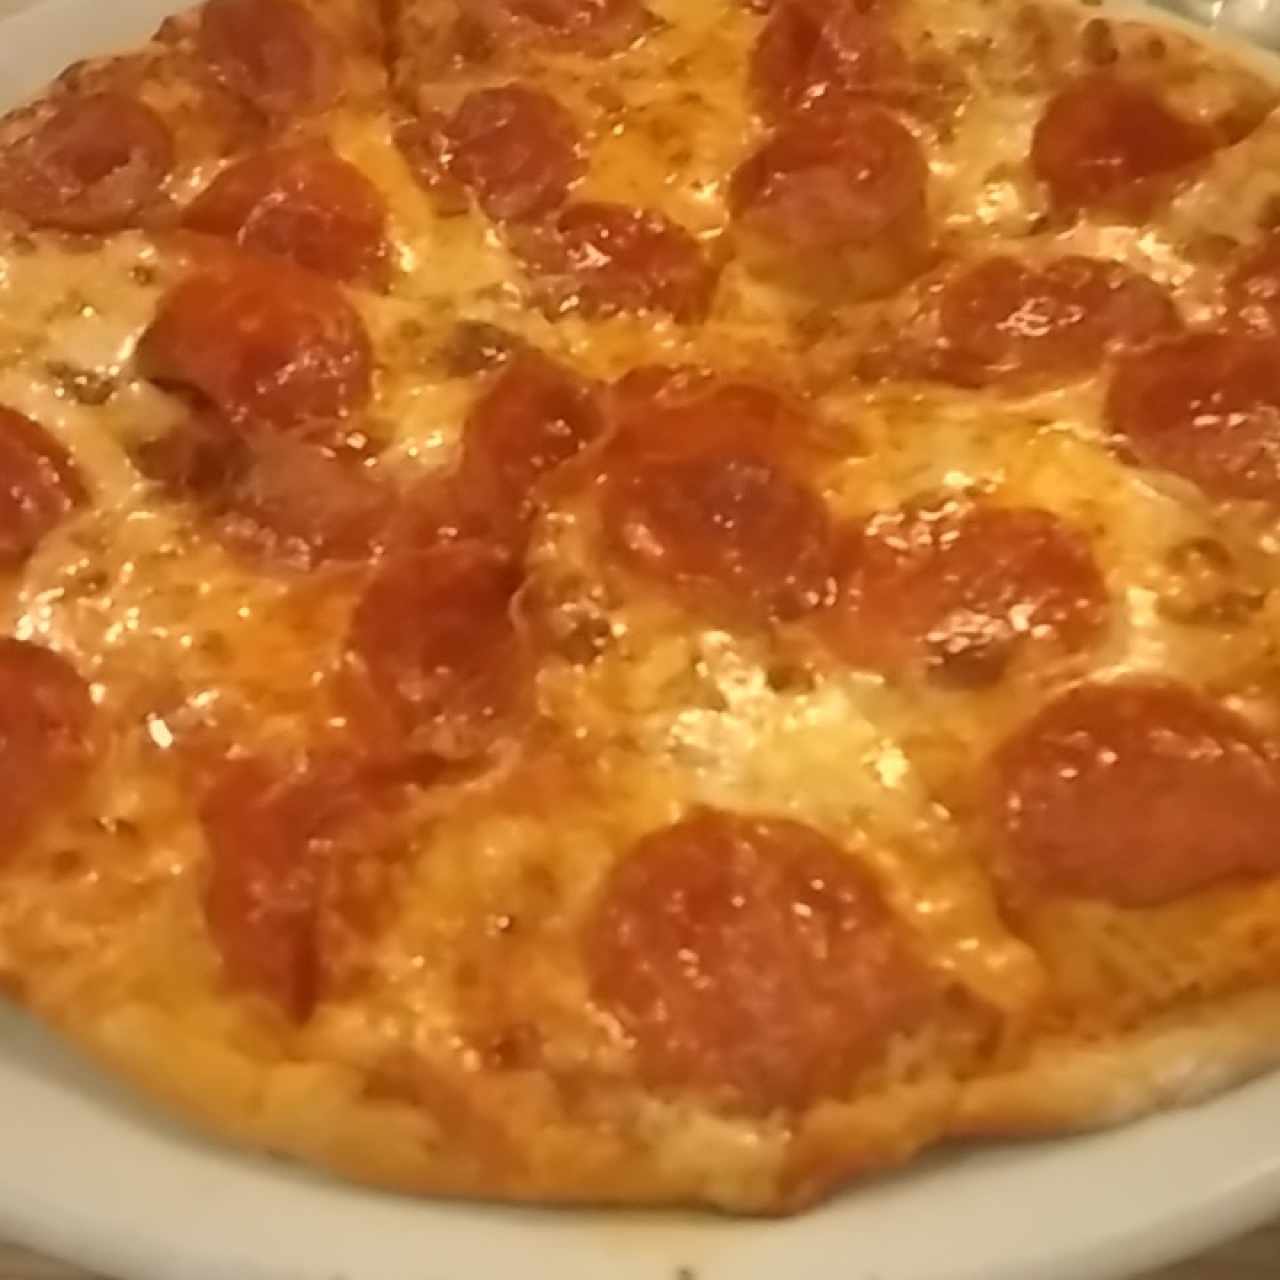 pizza de pepperoni